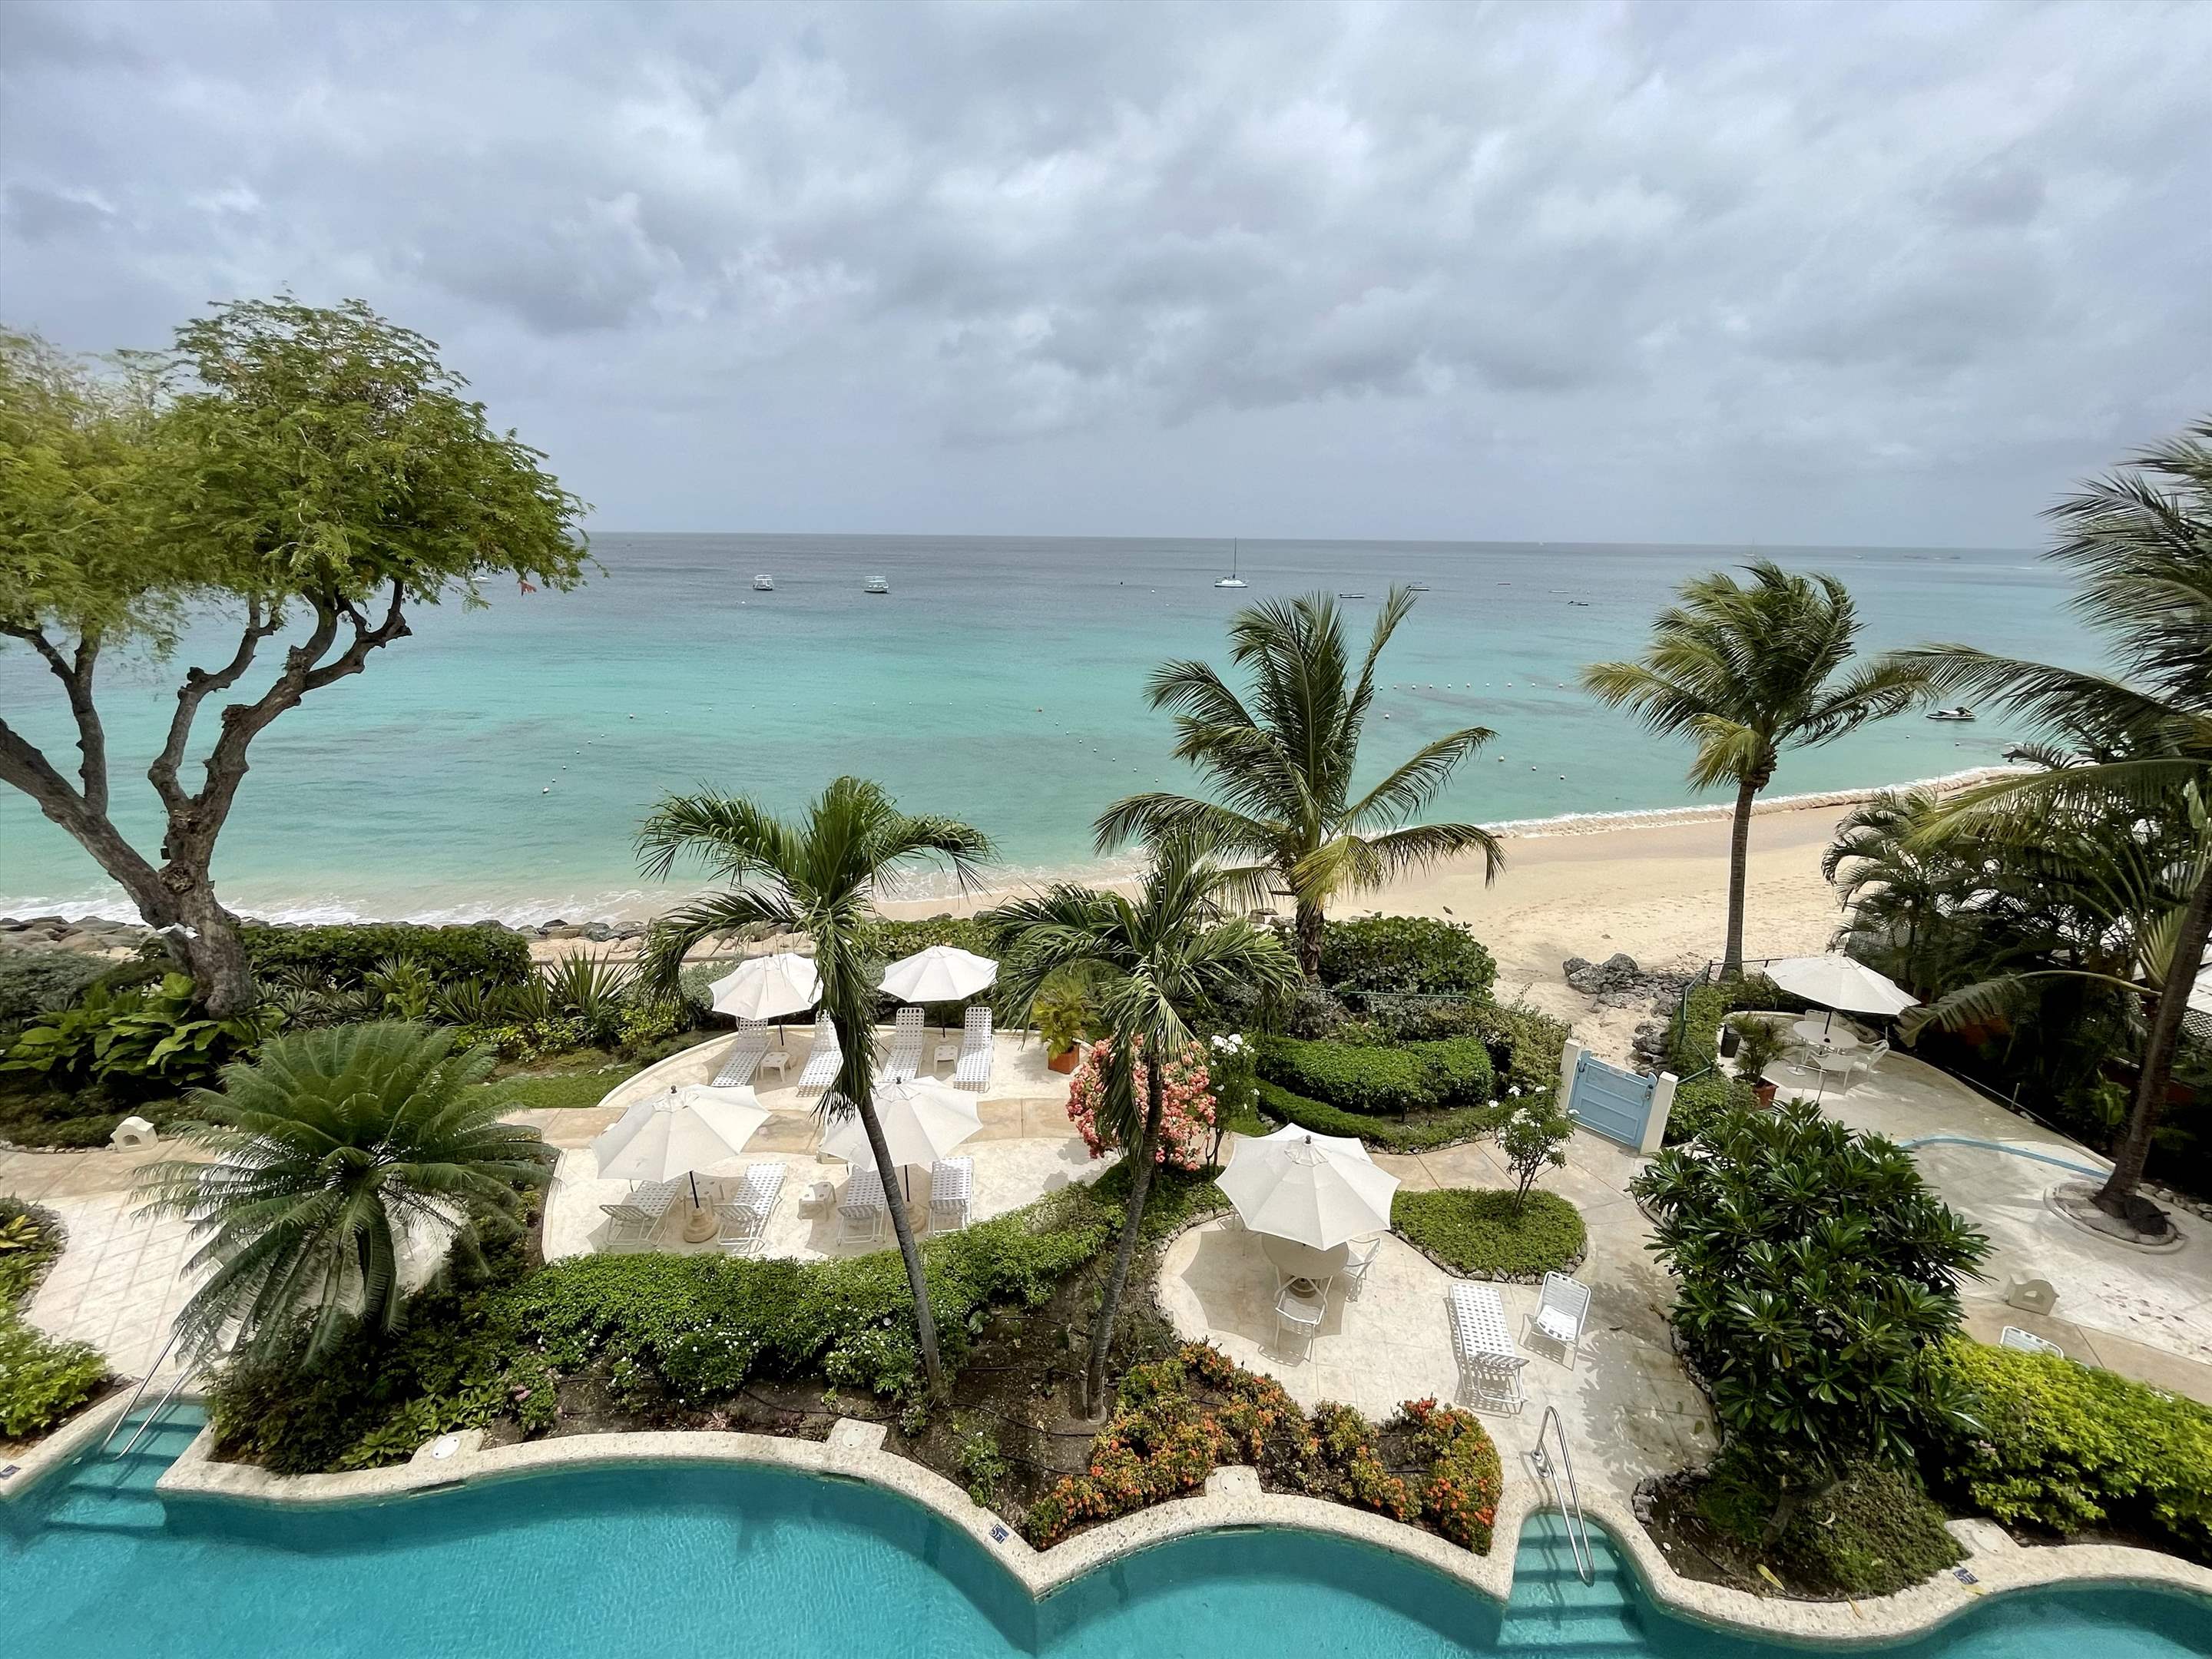 Villas on the Beach 403, 3 bedroom, 3 bedroom apartment in St. James & West Coast, Barbados